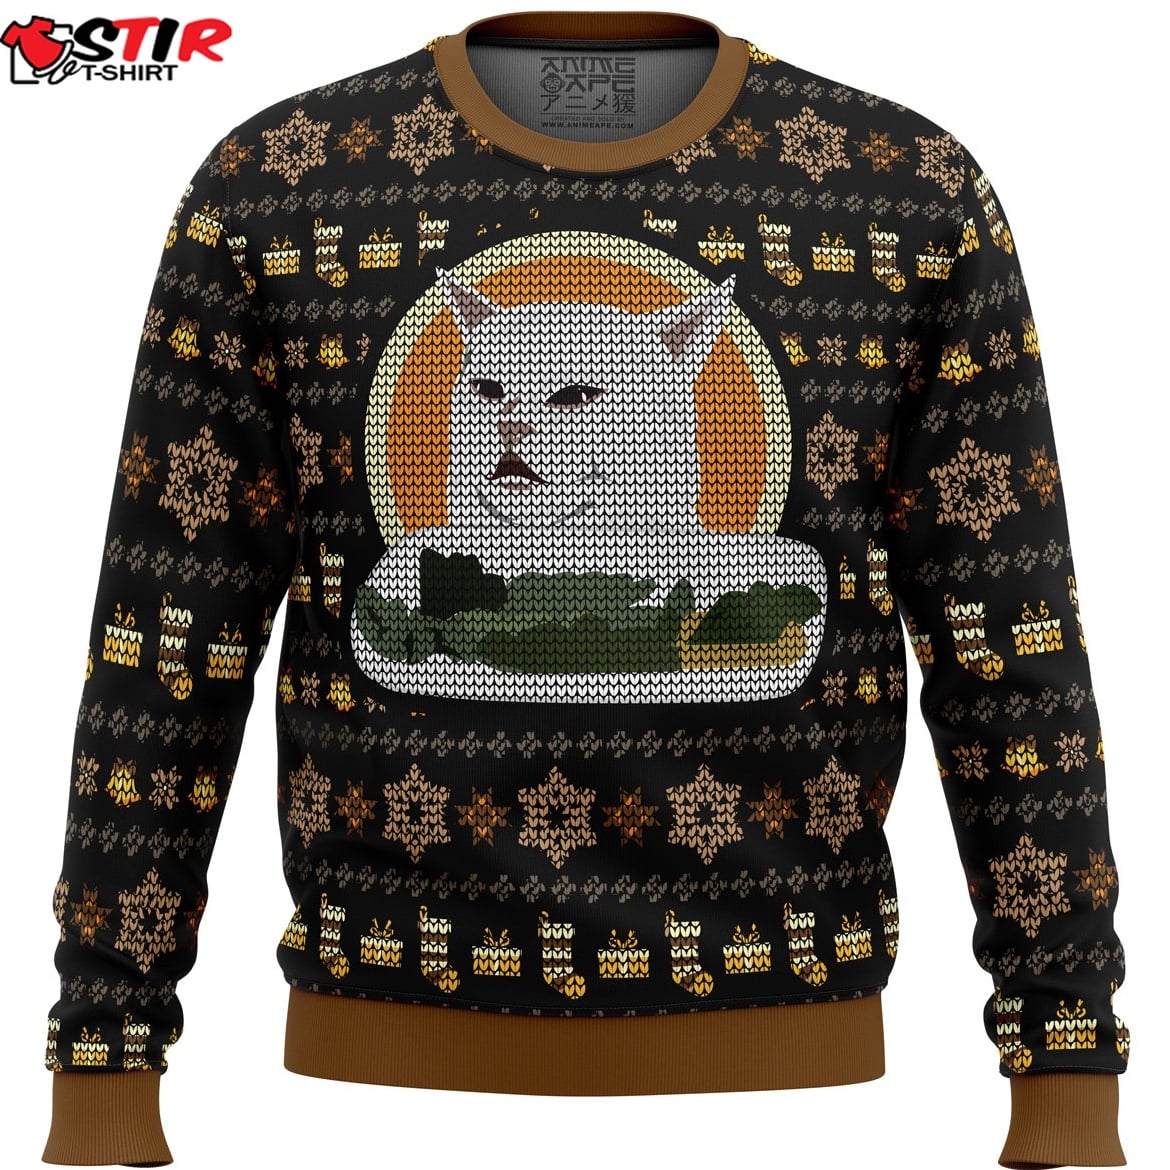 Woman Yelling At Cat Meme V2 Ugly Christmas Sweater Stirtshirt